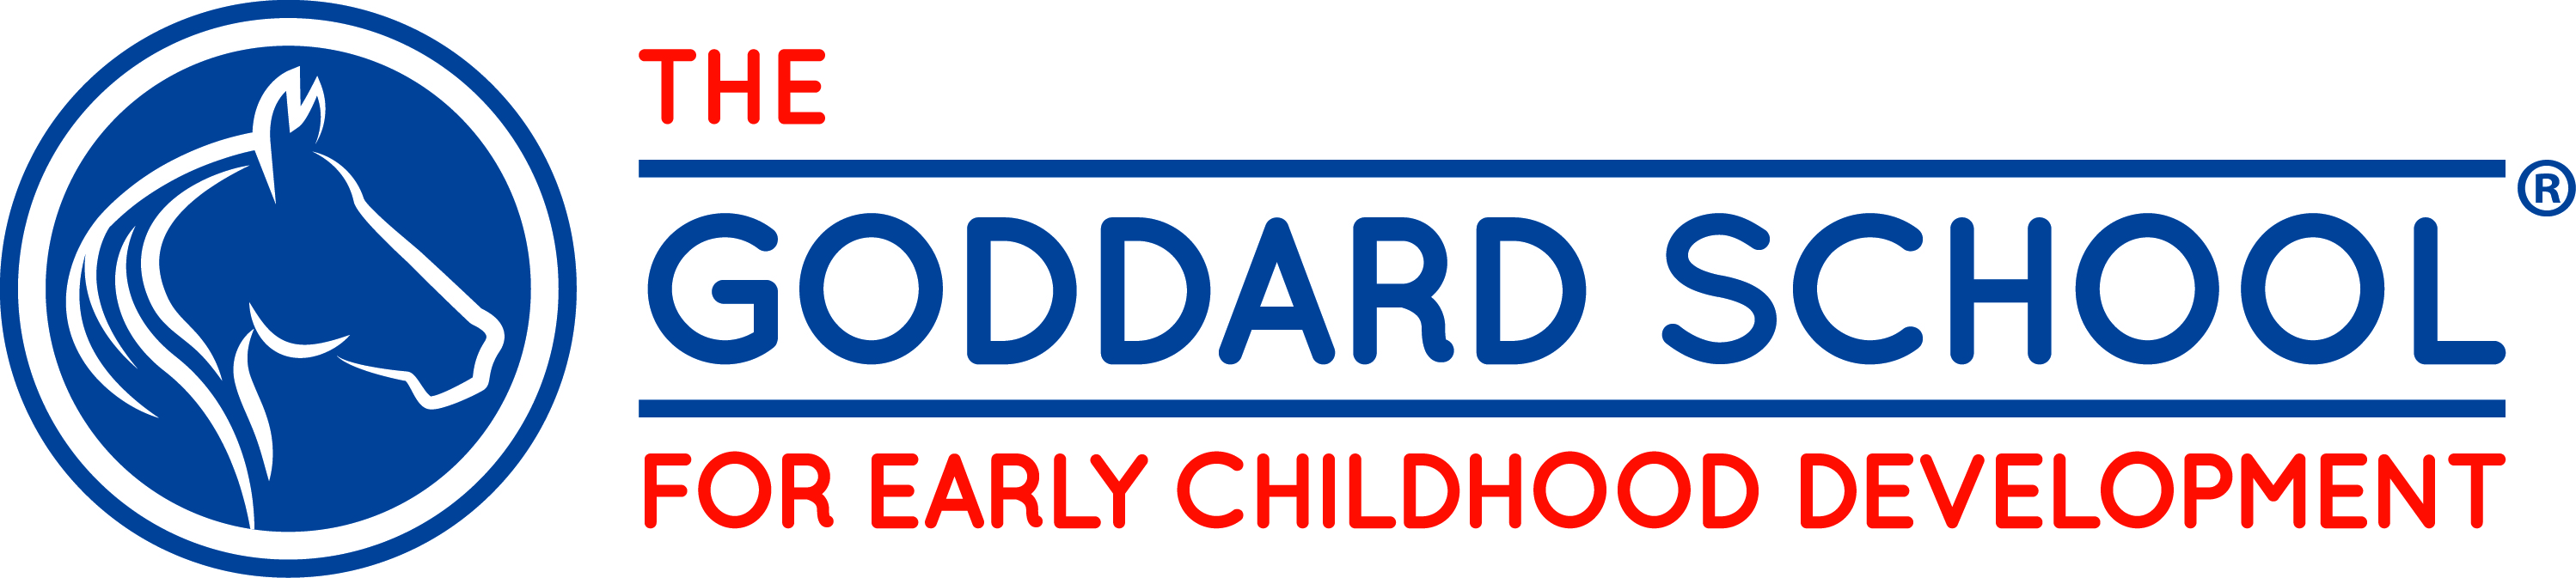 The Goddard School Of Flower Mound Logo